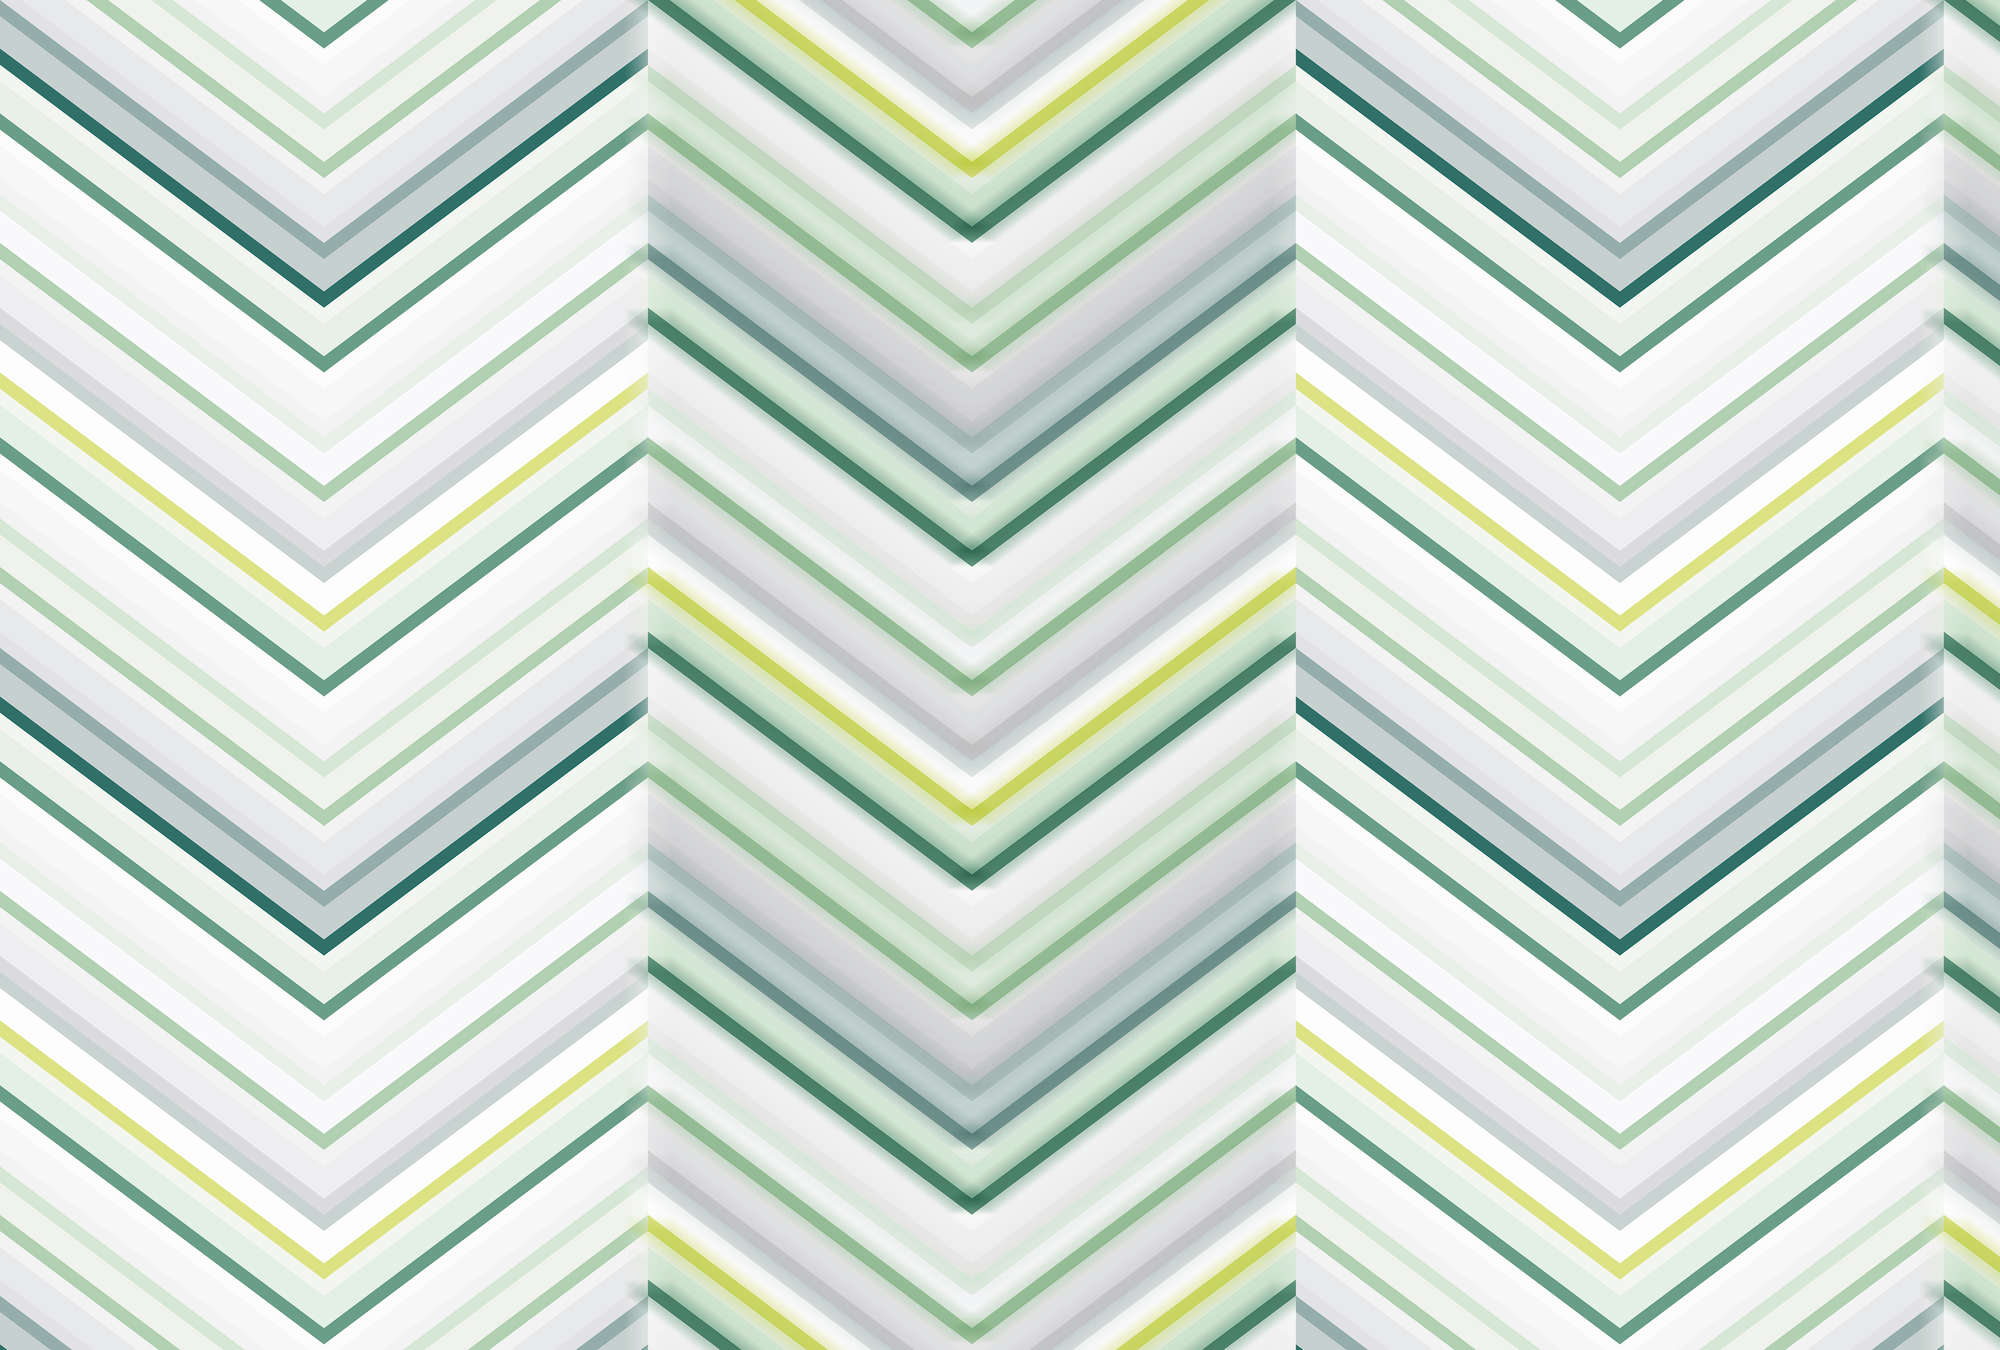             Bunte Fototapete Zick-Zack-Muster & Liniendesign – Grau, Gelb, Grün
        